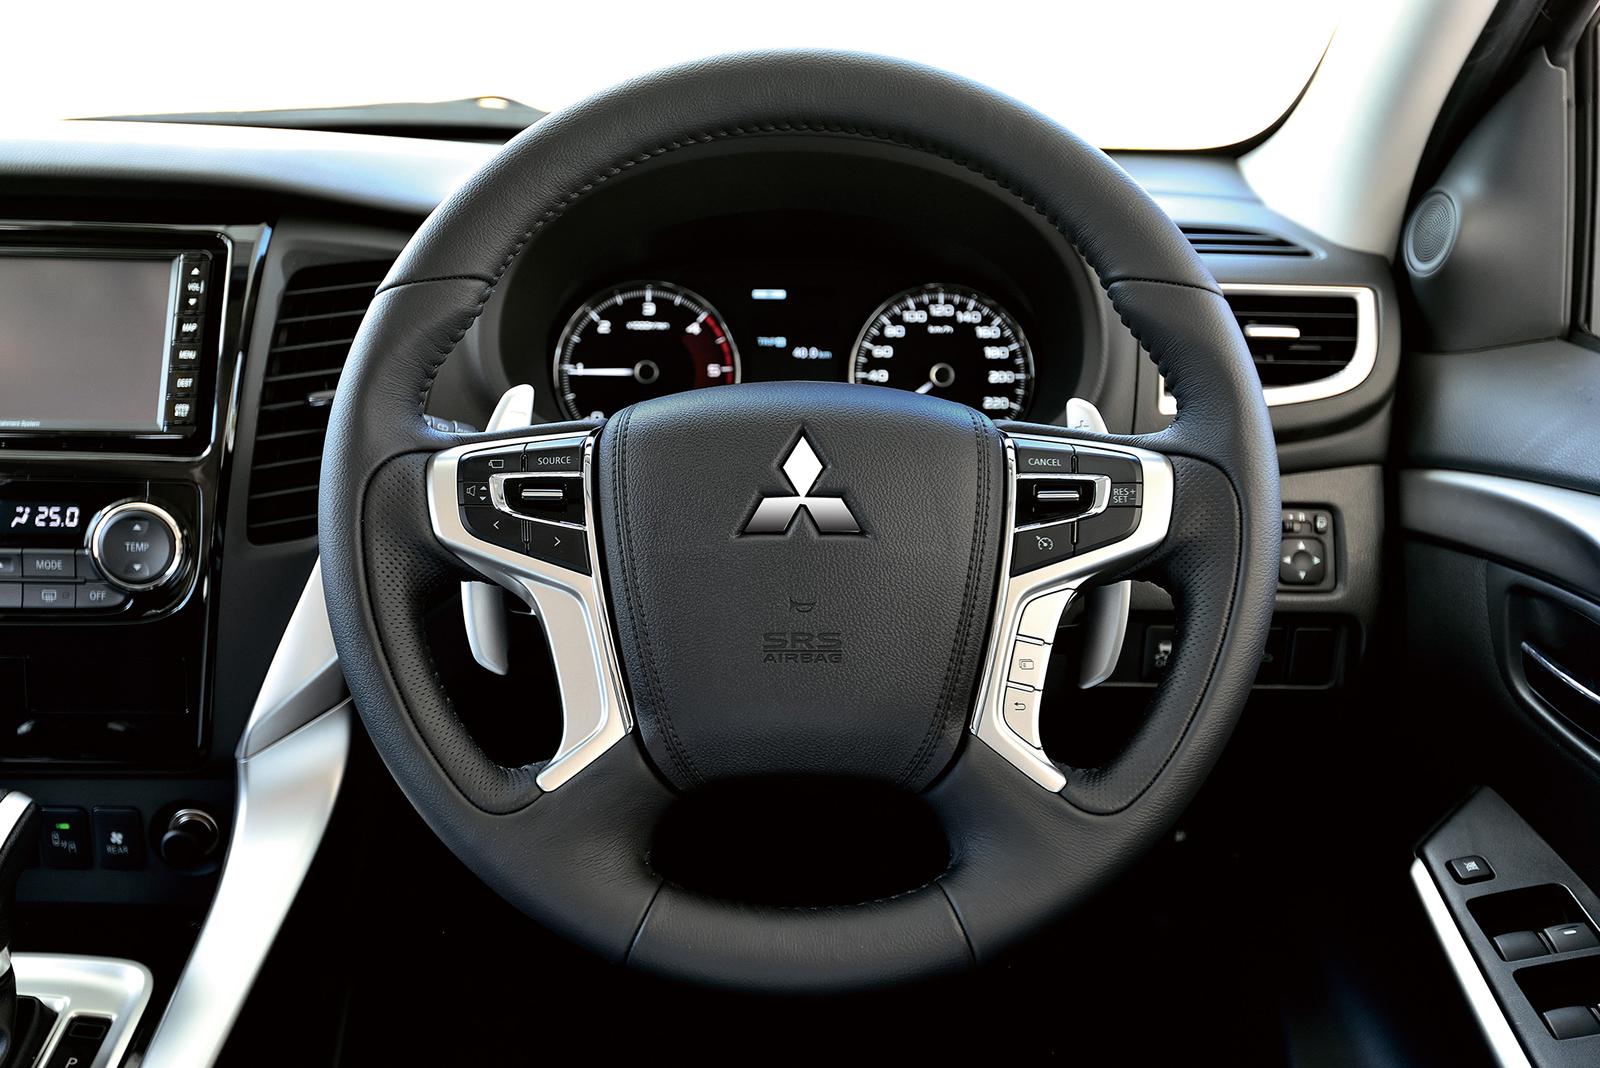 2016 Mitsubishi Pajero Sport steering wheel unveiled